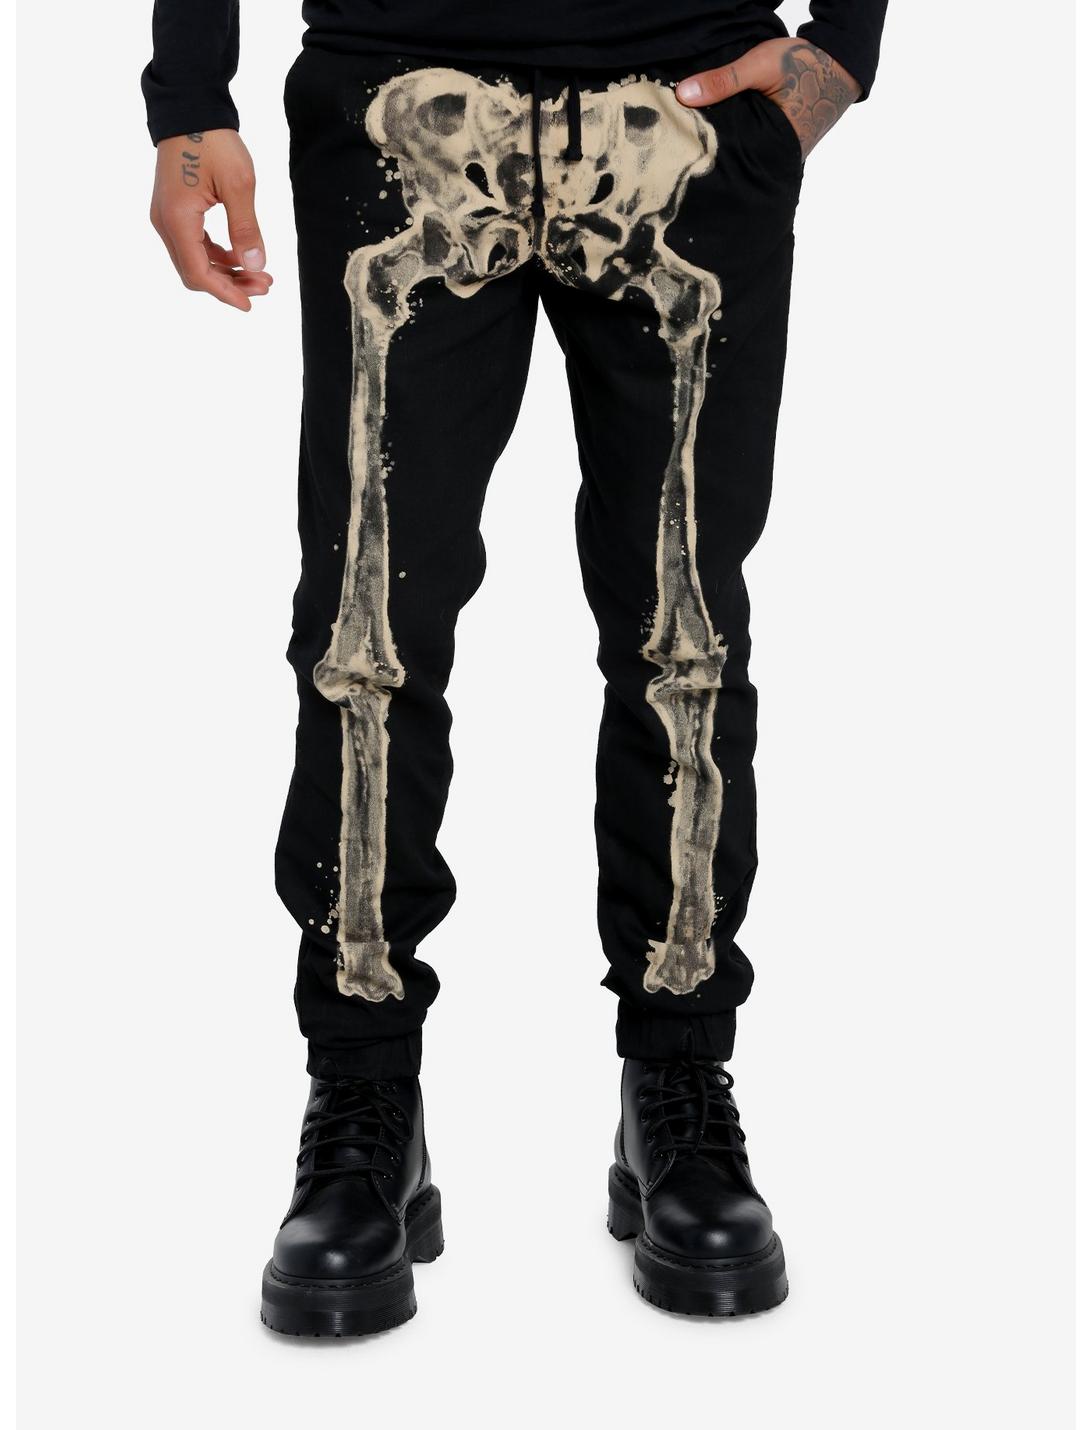 Skeleton Jogger Pants